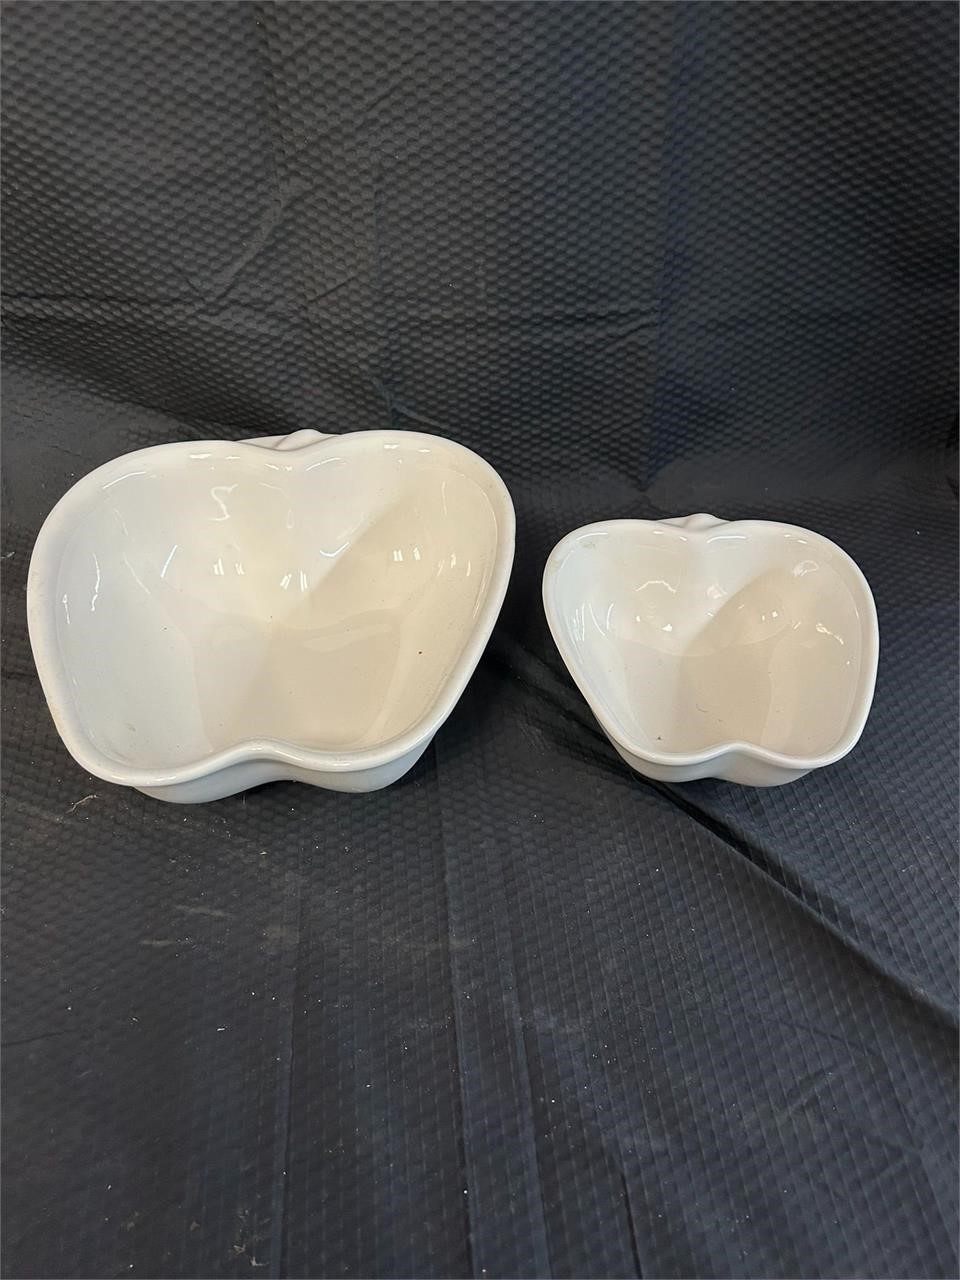 2 White Ceramic Apple Serving Trays